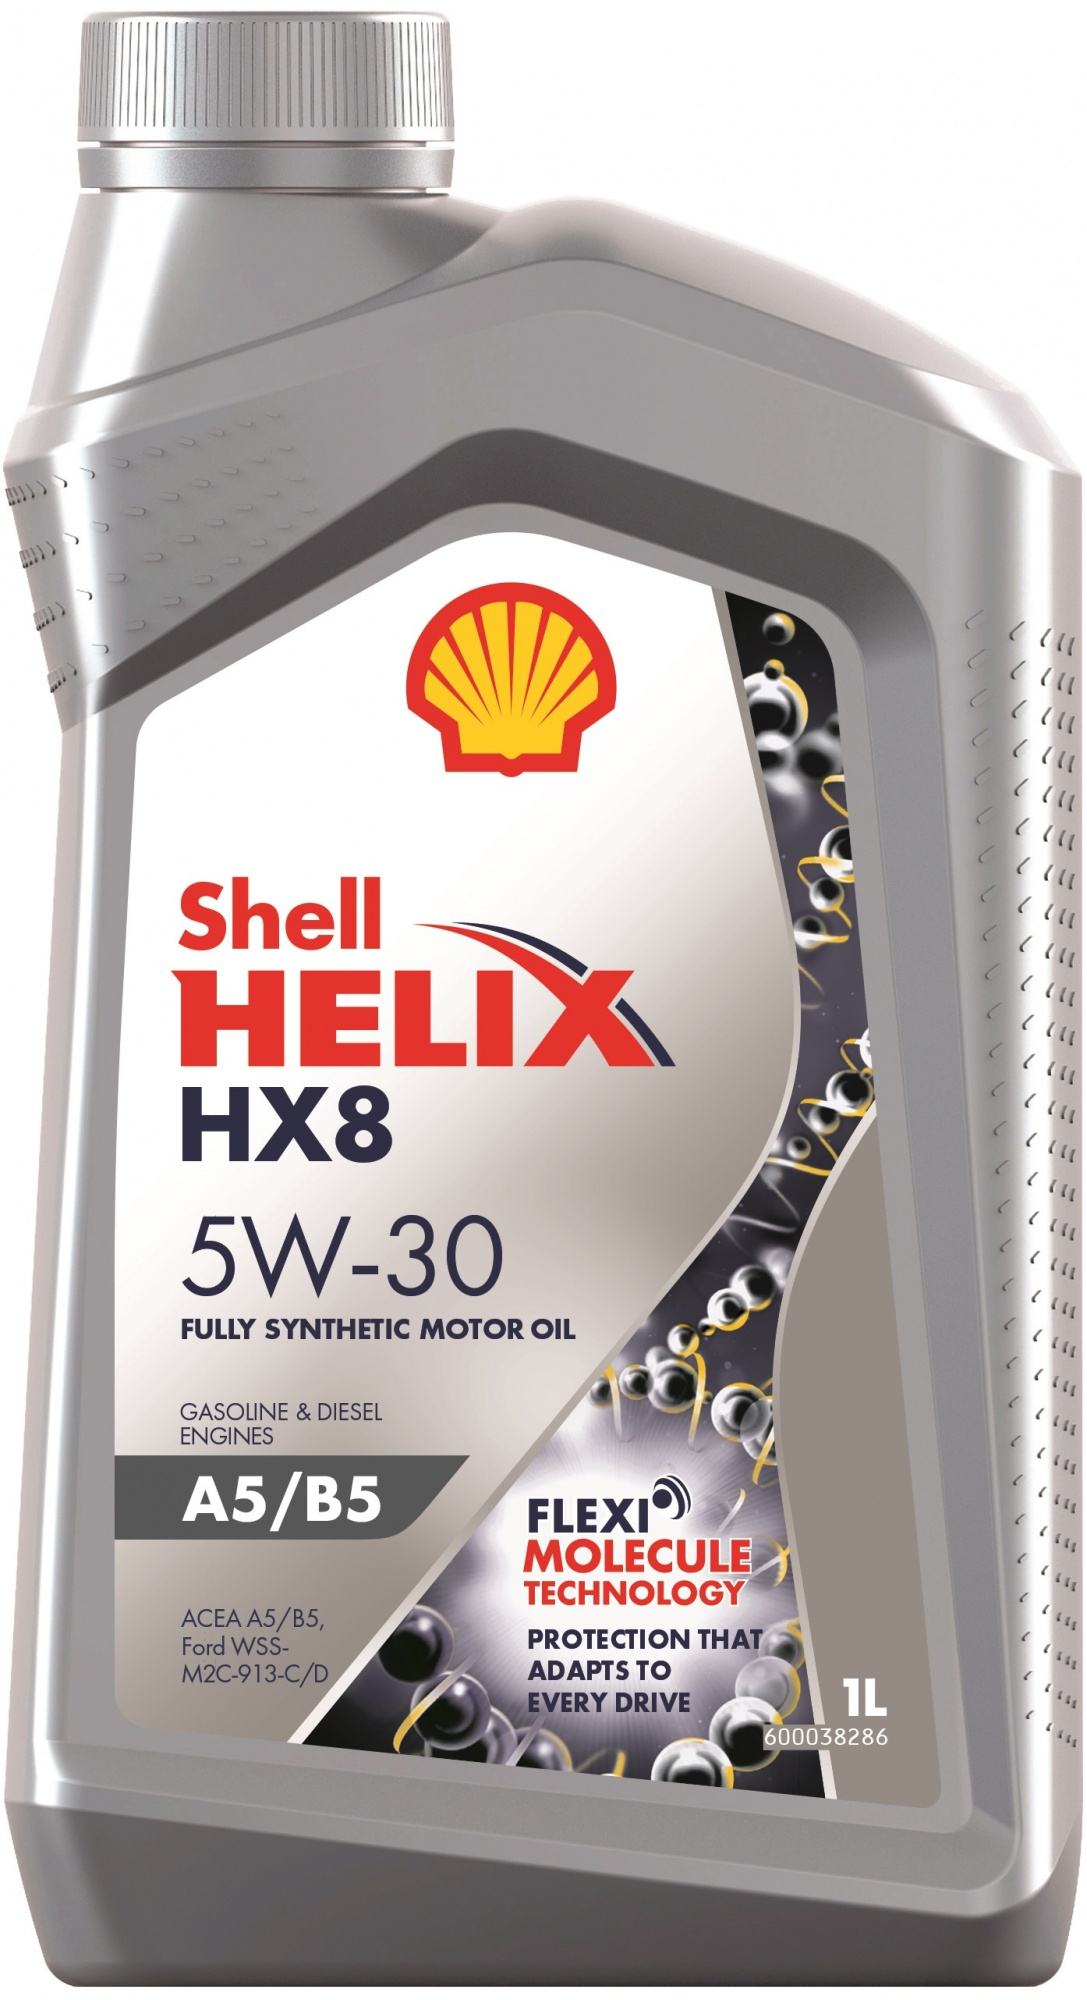 Моторное масло Shell Helix HX8 А5/B5 5W-30, 550046778, 1л